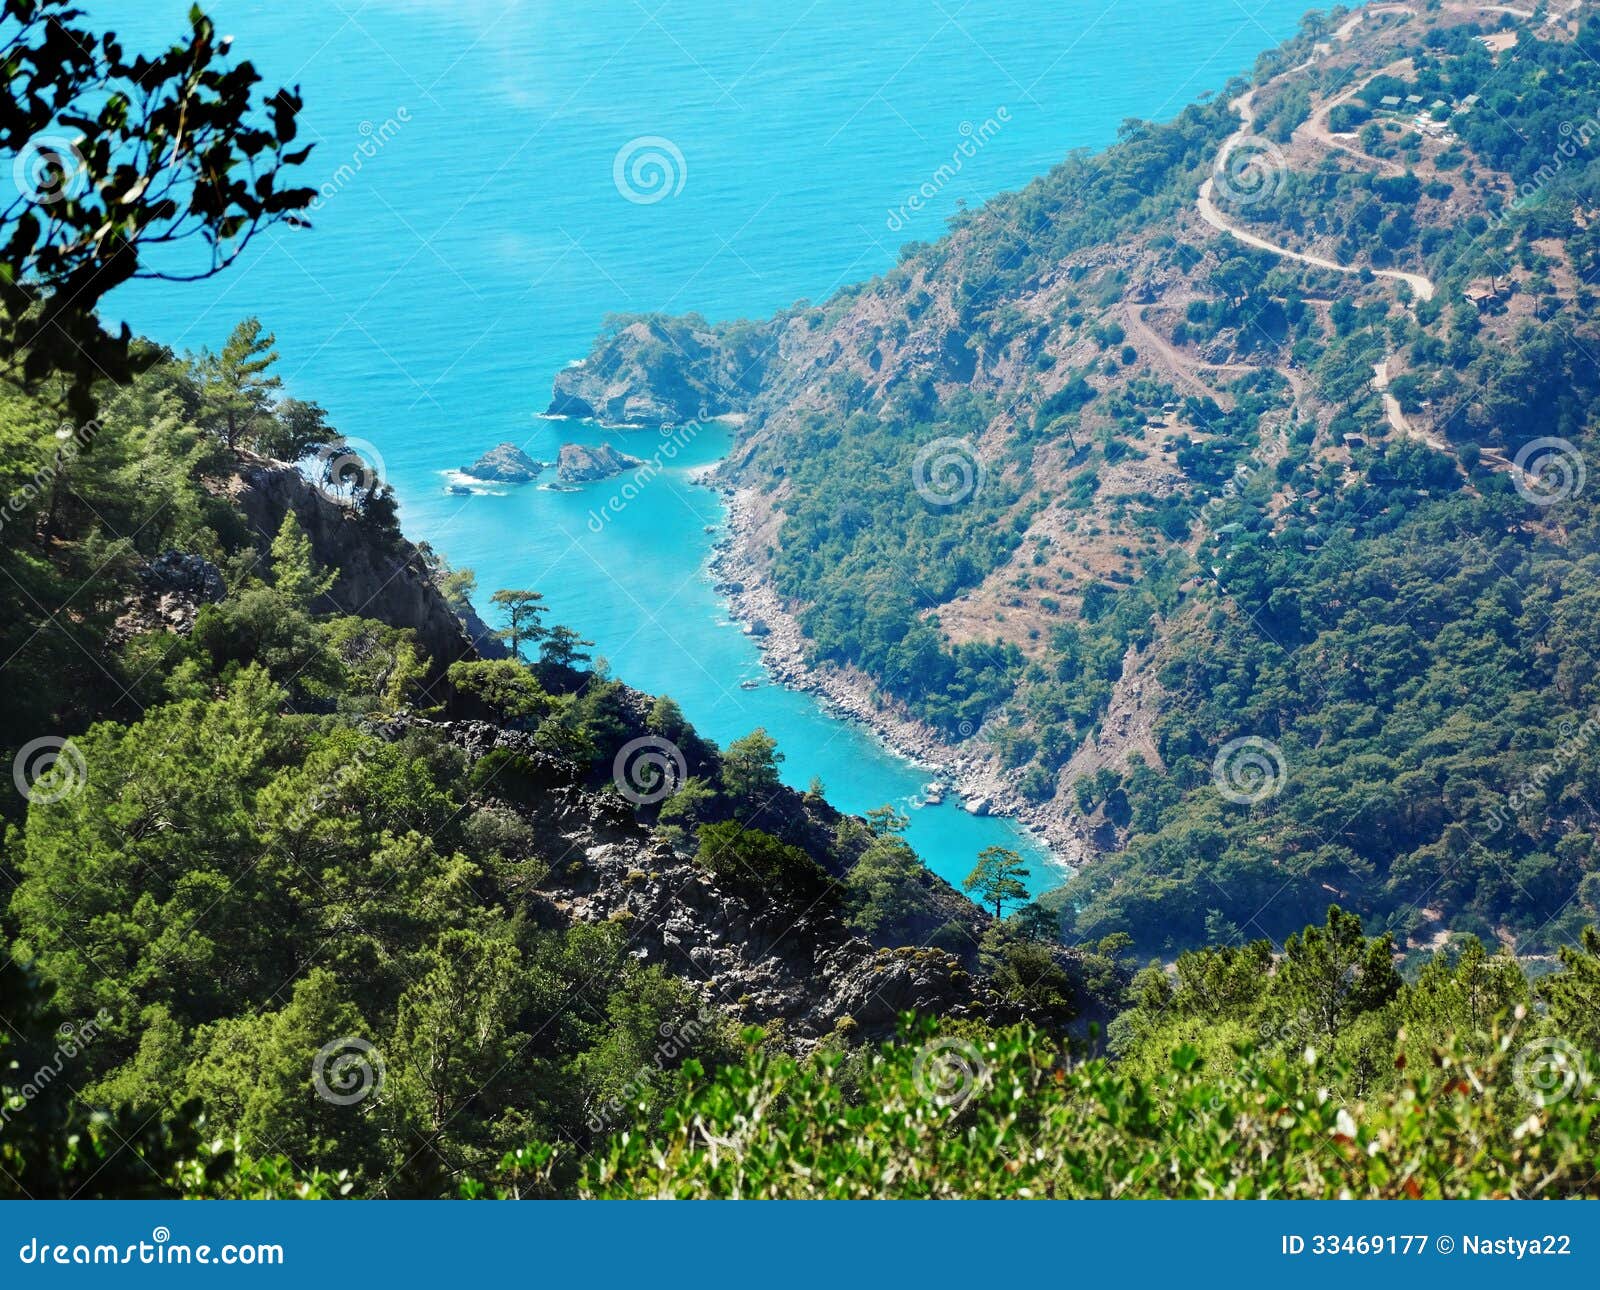 Coastline Landscape of Mediterranean Sea Turkey Stock Image - Image of ...